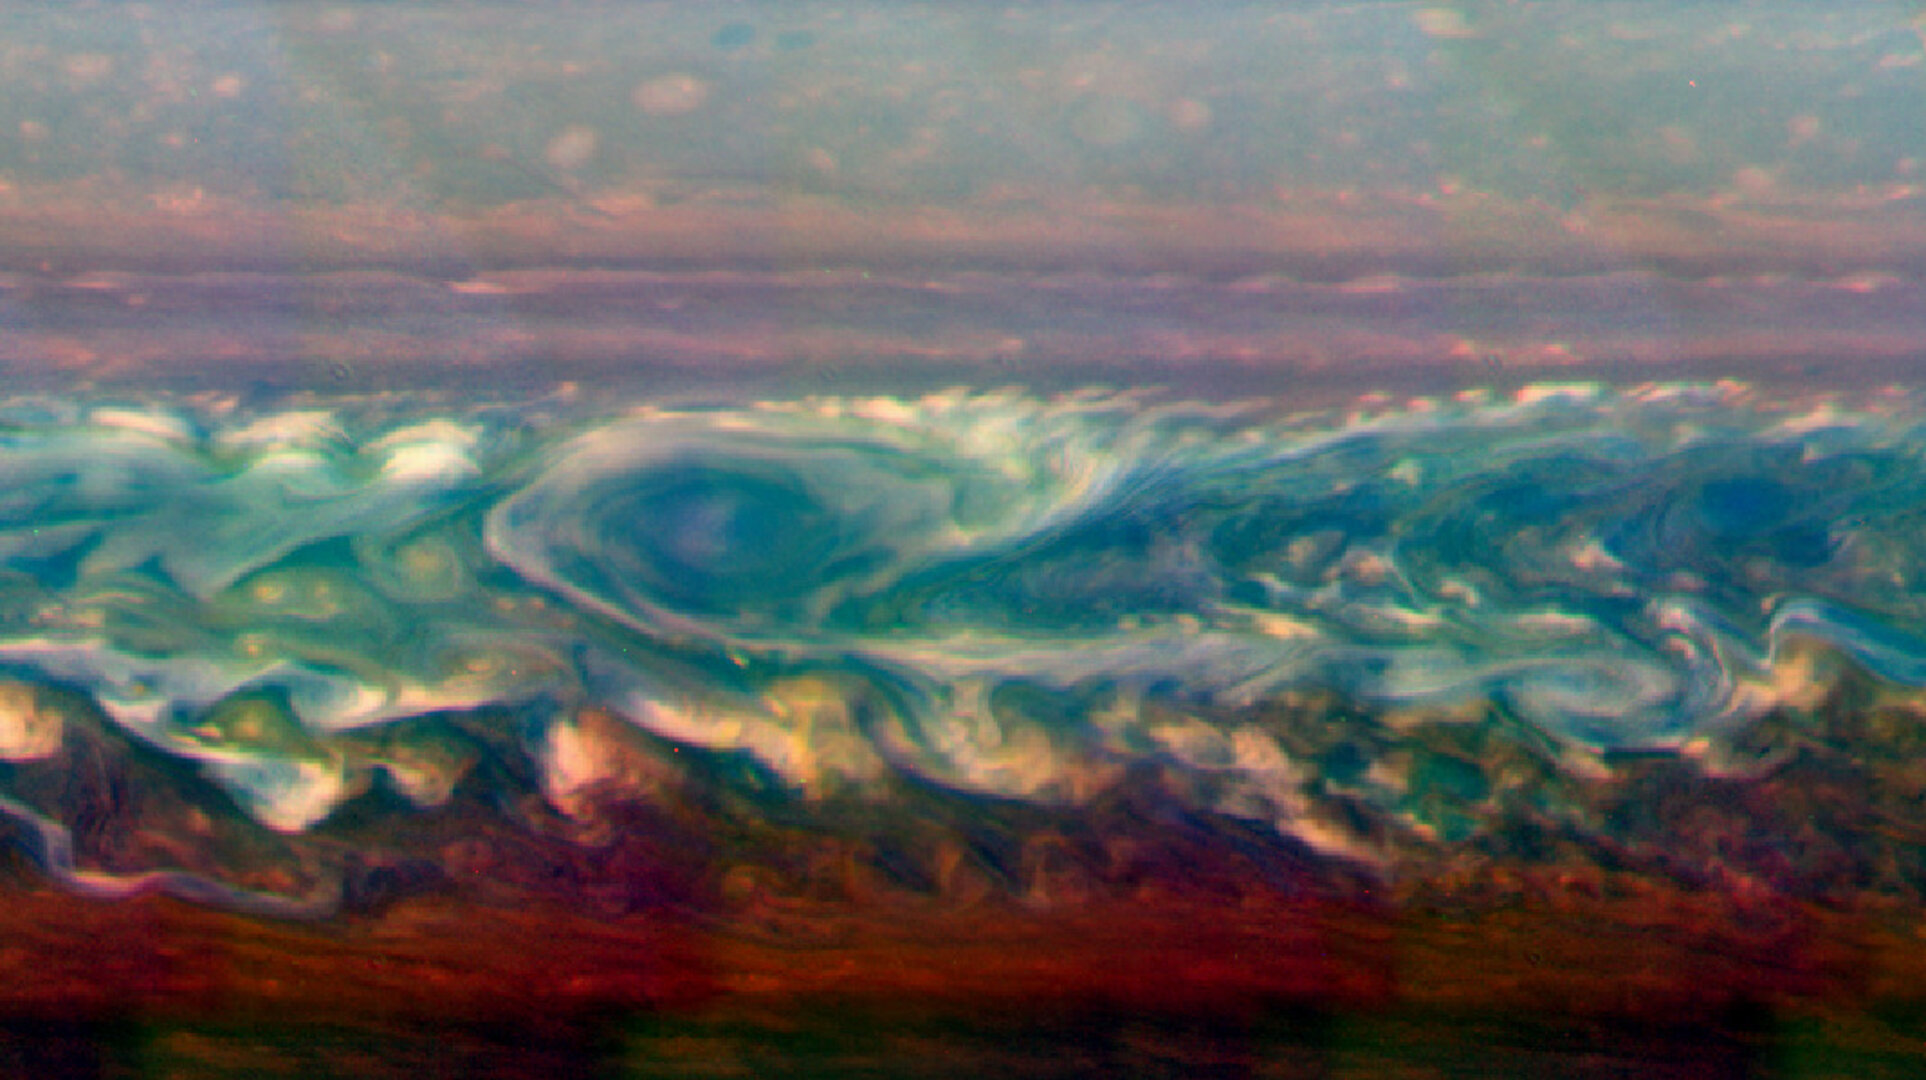 Churning atmosphere on Saturn